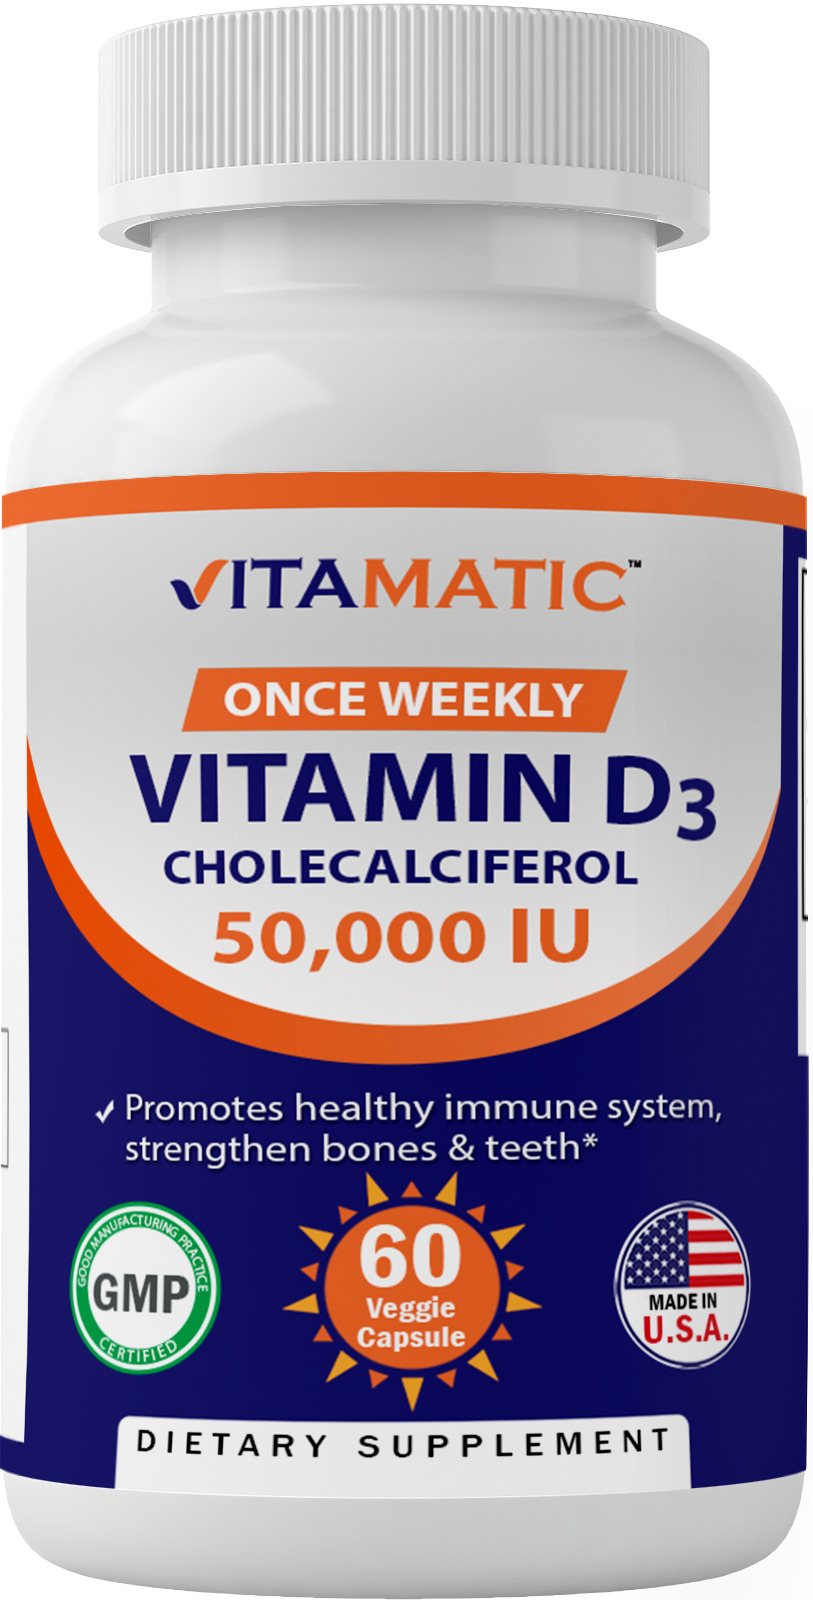 Vitamatic Vitamin D3 Weekly Dose 50,000 IU (Cholecalciferol) 60 Veggie Capsules